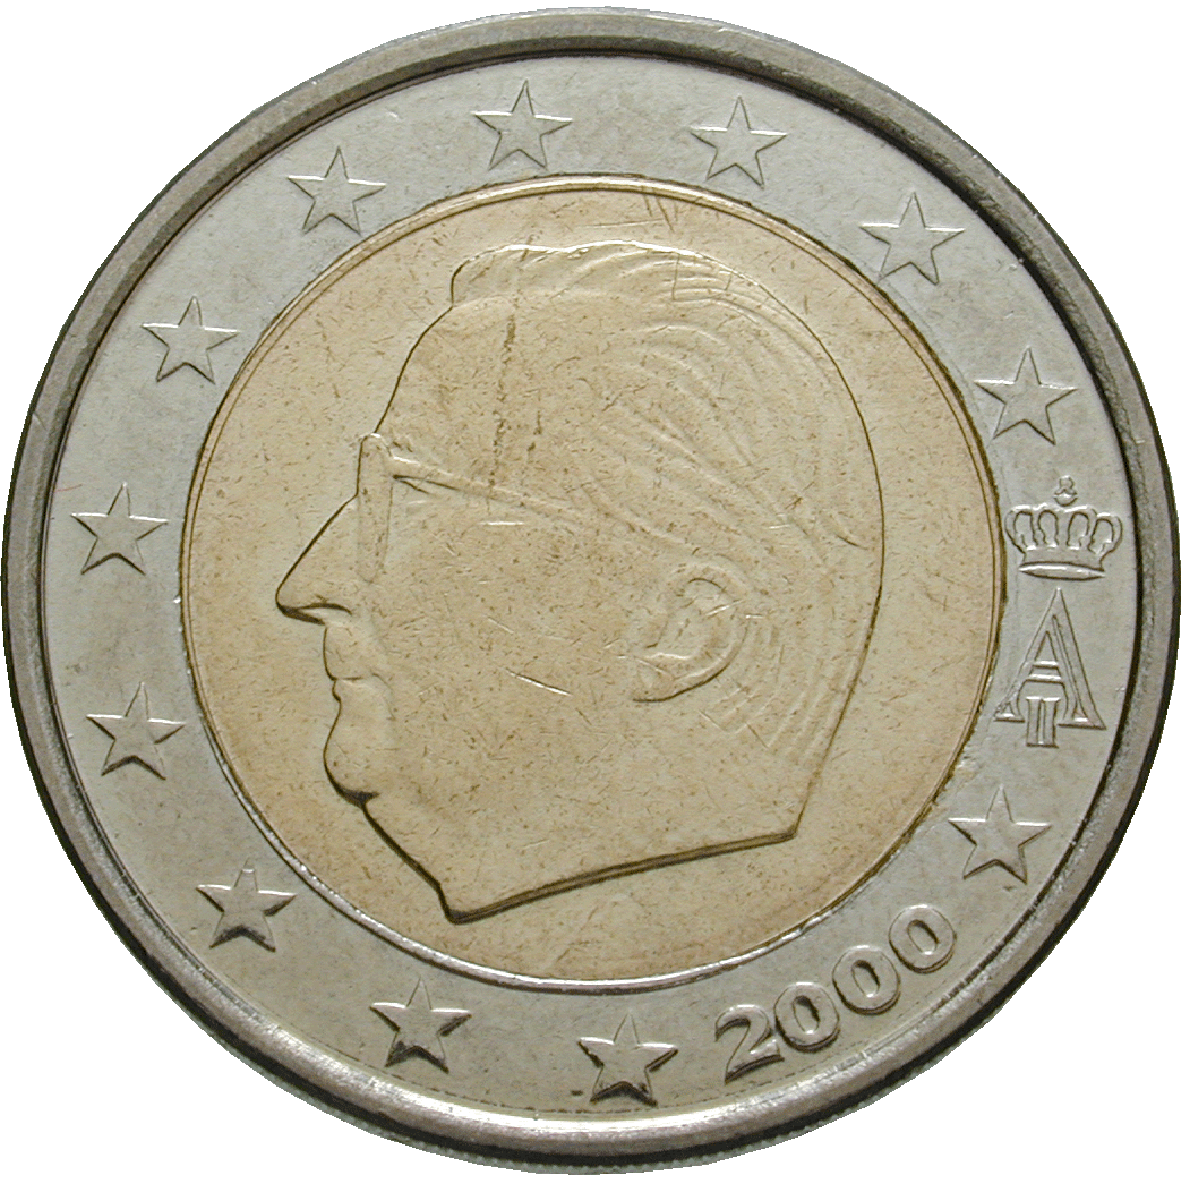 Königreich Belgien, Albert II., 2 Euro 2000 (reverse)